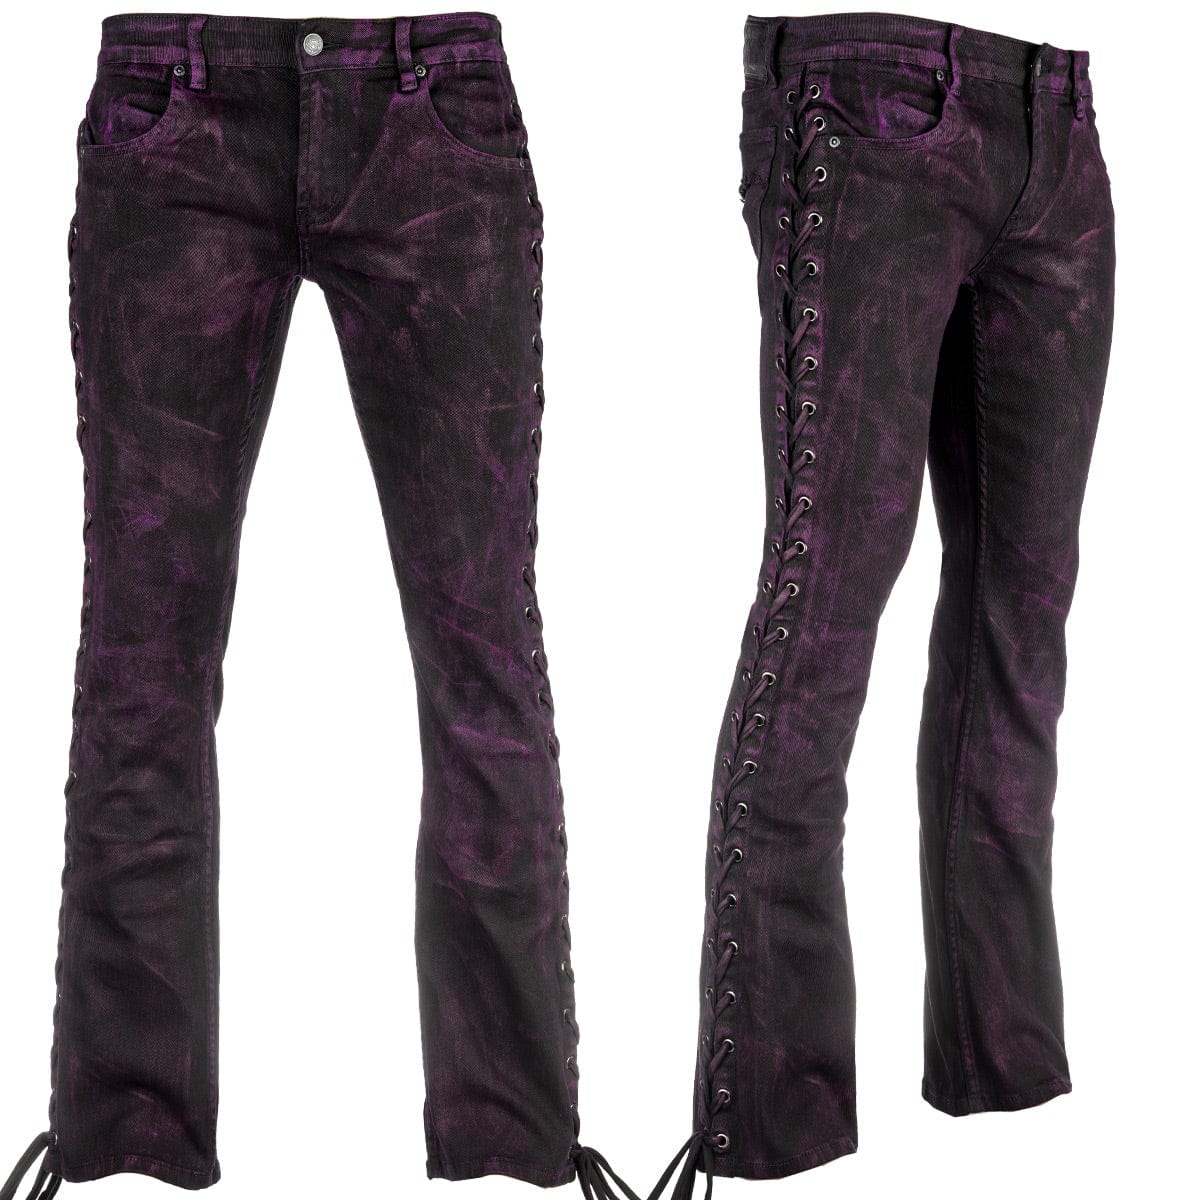 Custom Chop Shop Pants Wornstar Custom Jeans - Purple Haze Alloy Washed Side Laced